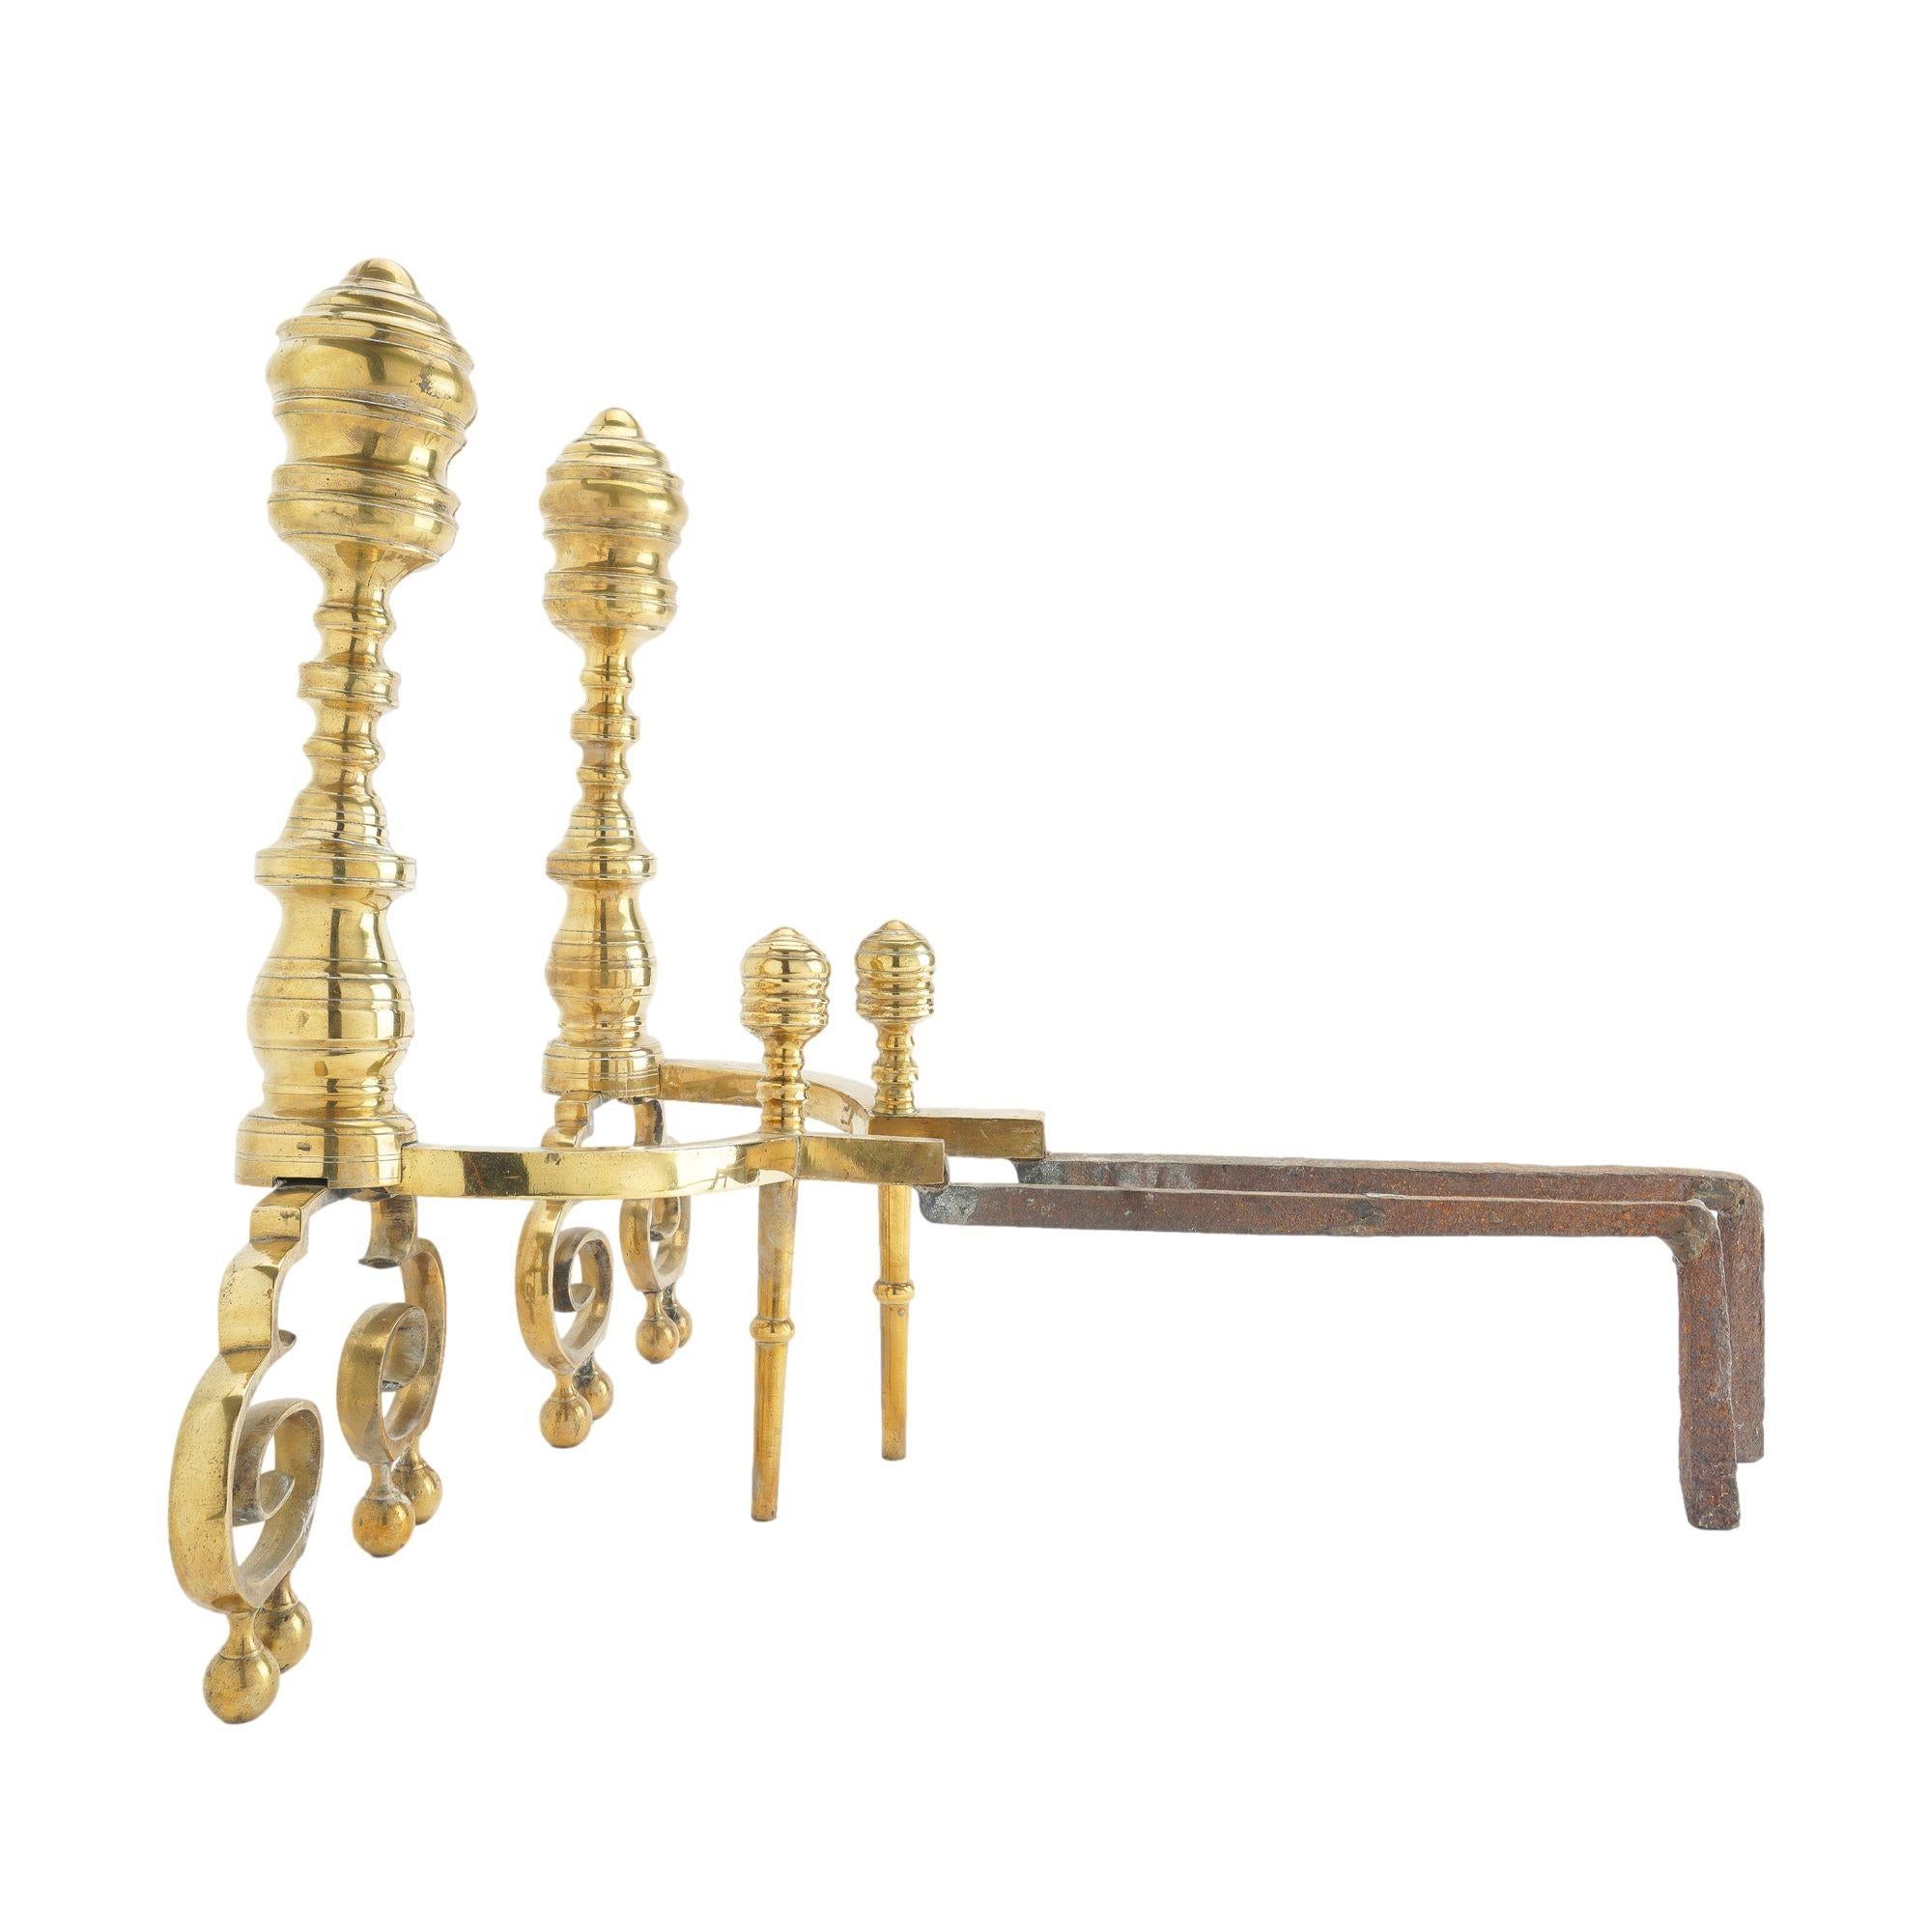 19th Century Pair of Philadelphia Neoclassic brass andirons with fire tools, c. 1815-25